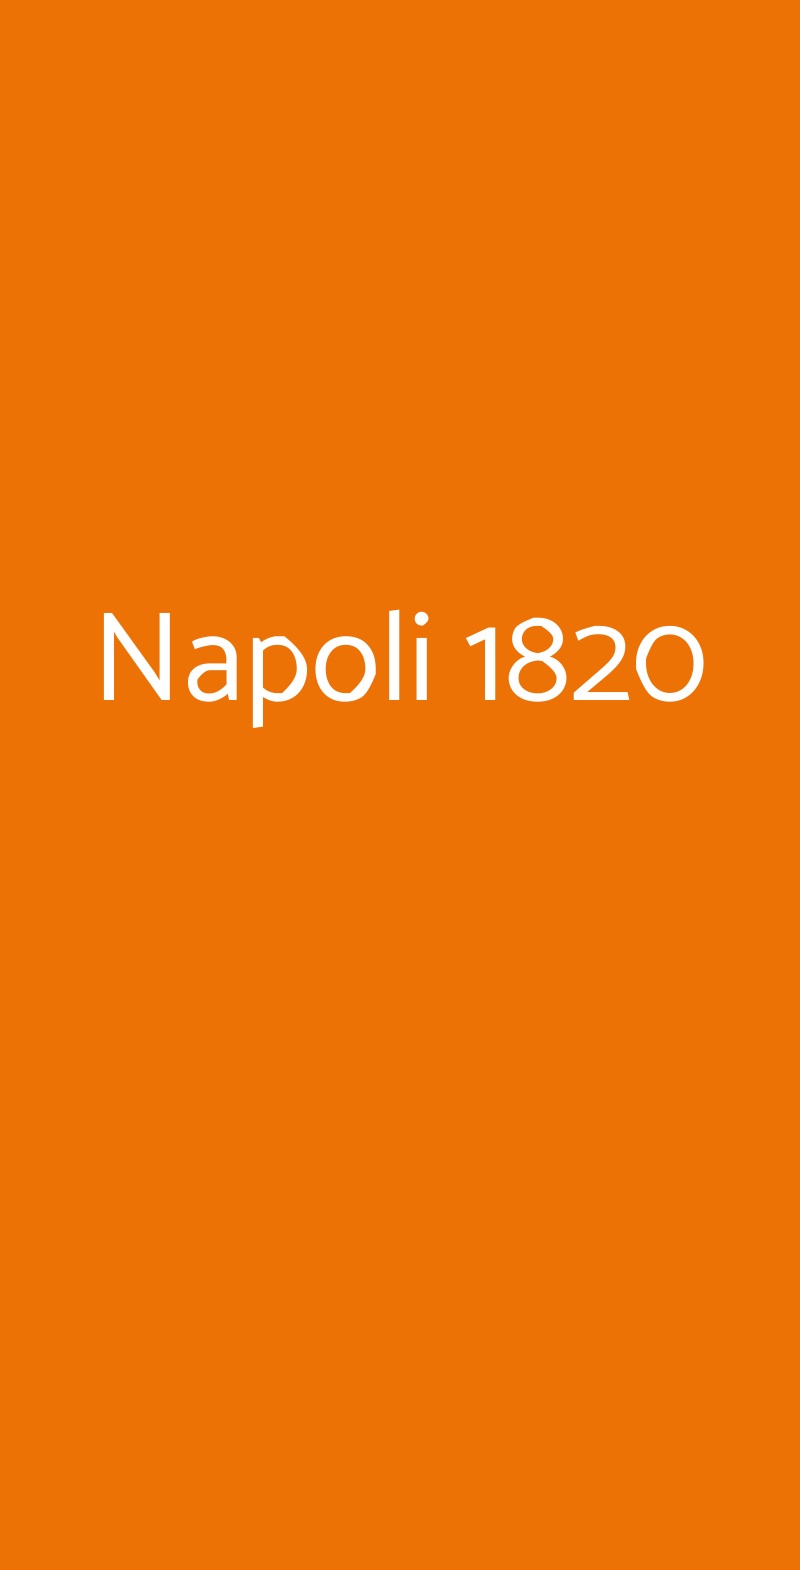 Napoli 1820 Milano menù 1 pagina